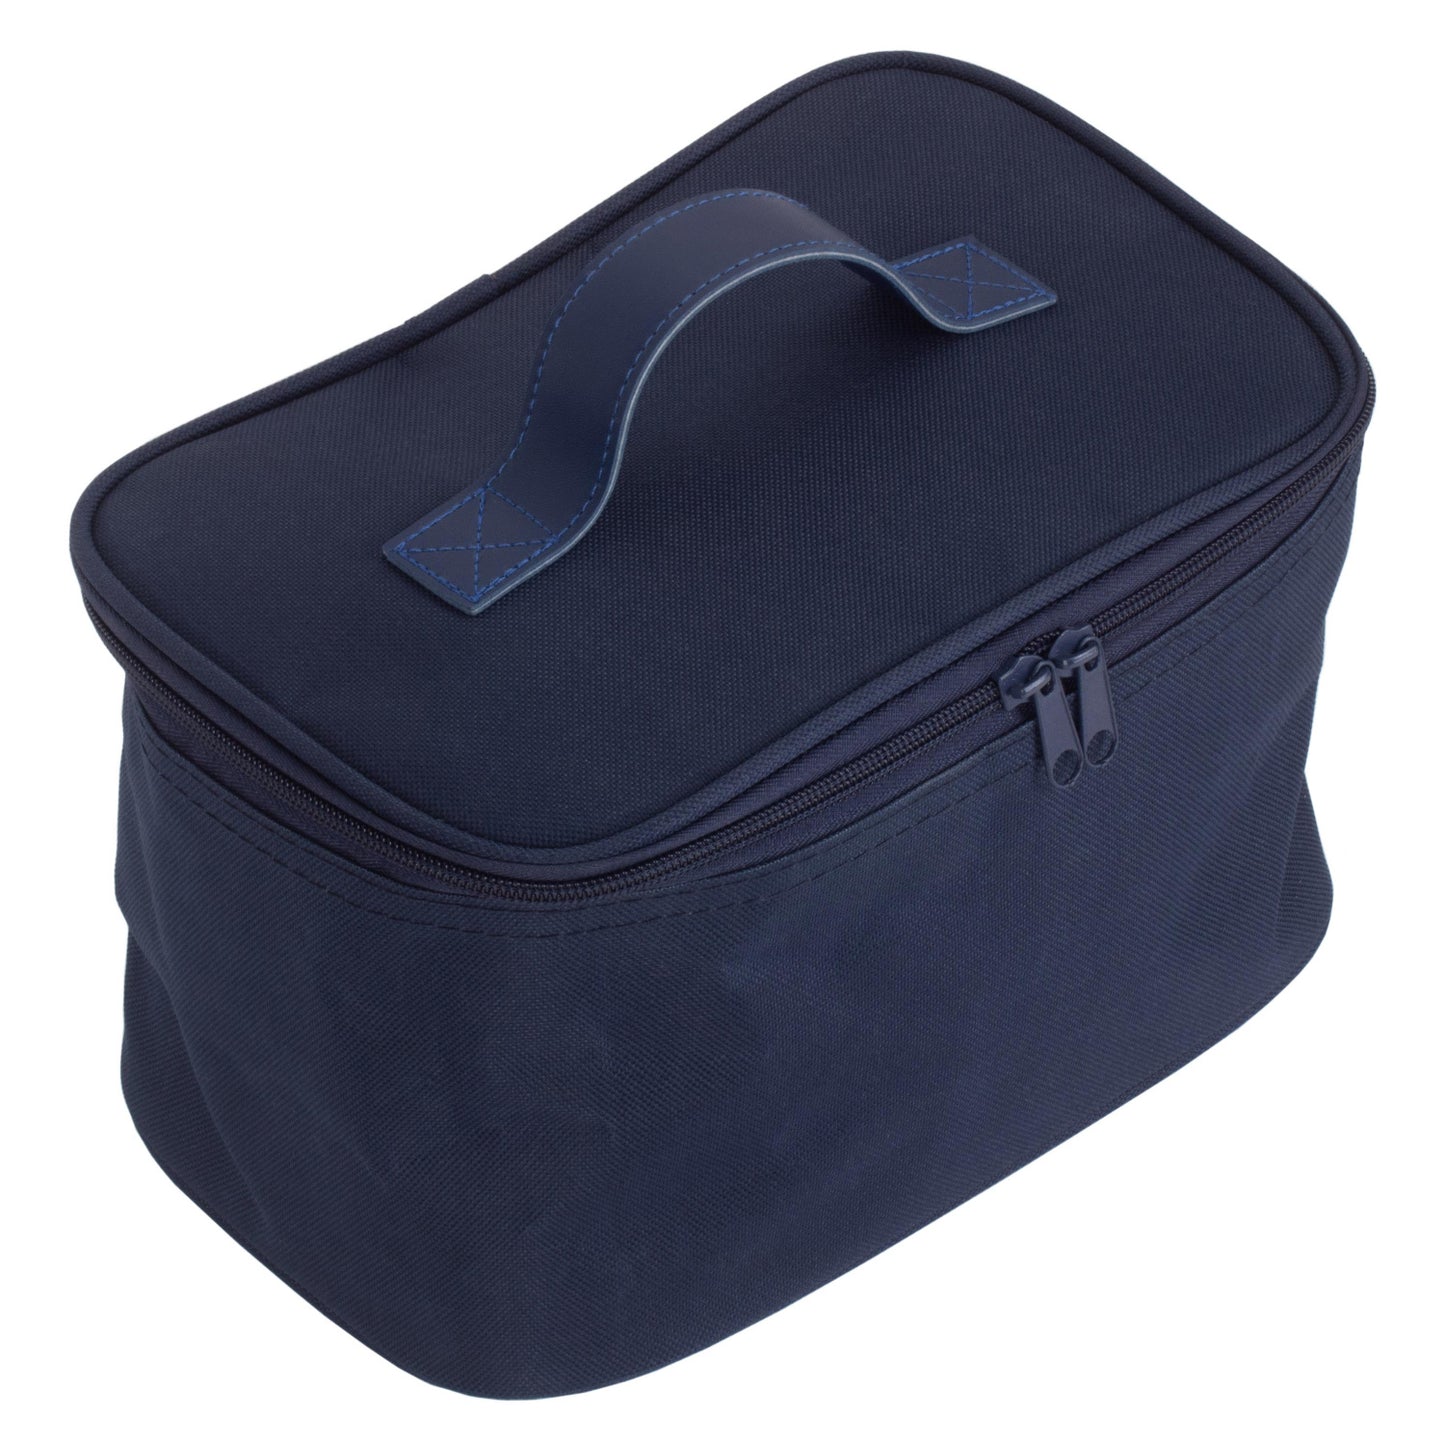 Small Navy Blue Cooler Bag